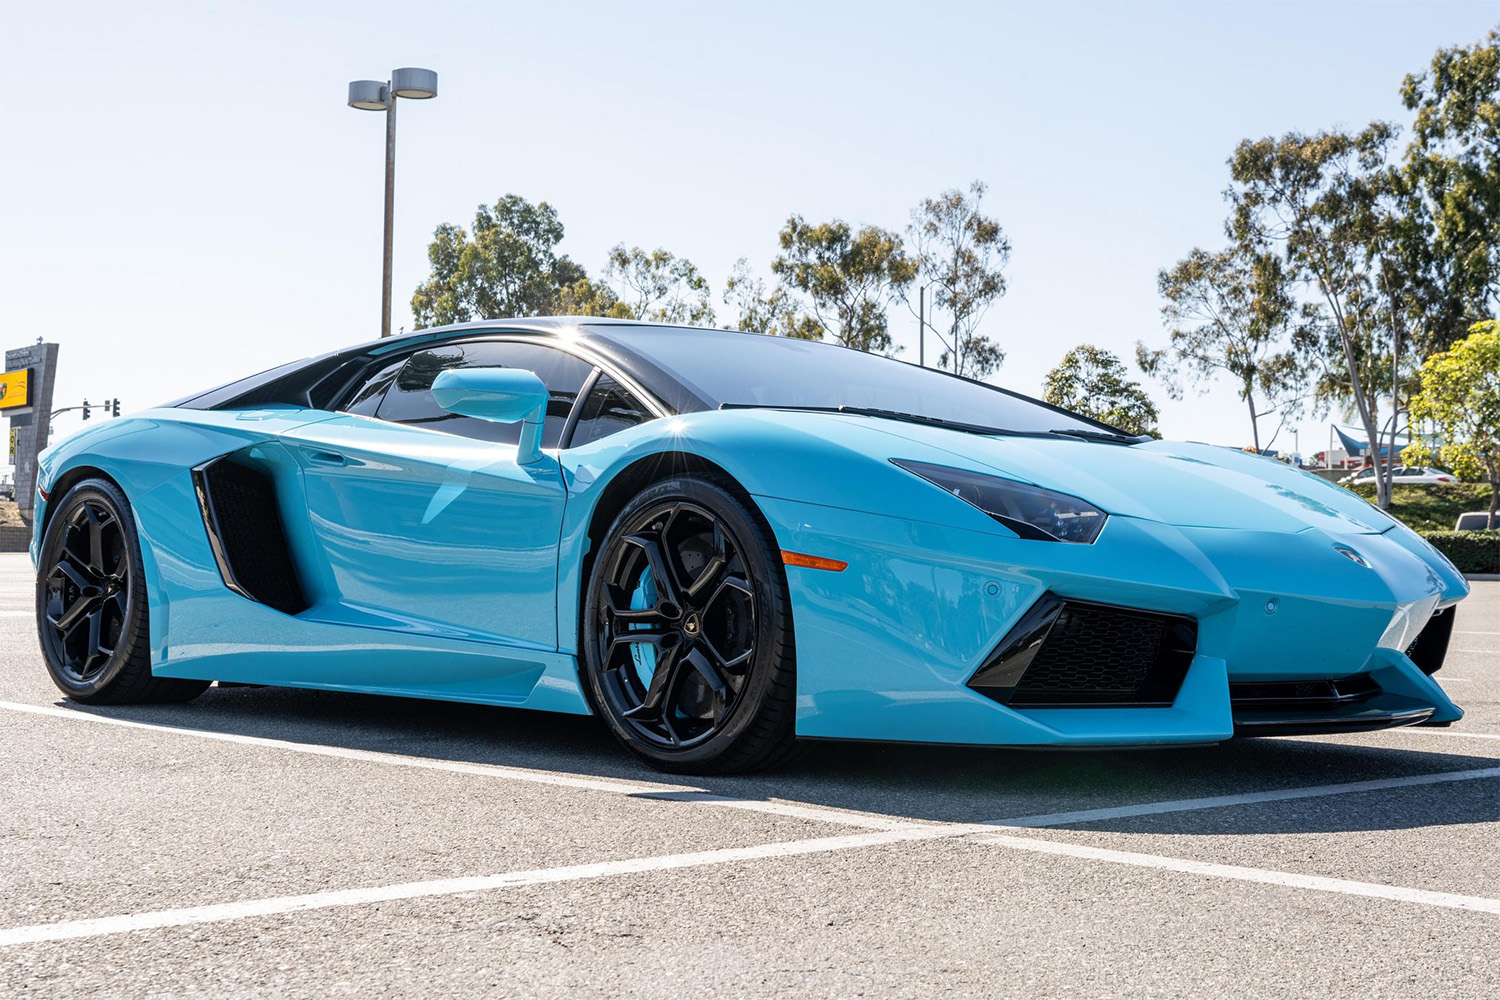 Custom painted Miami Blue Lamborghini Aventador sitting in Beverly Hills California